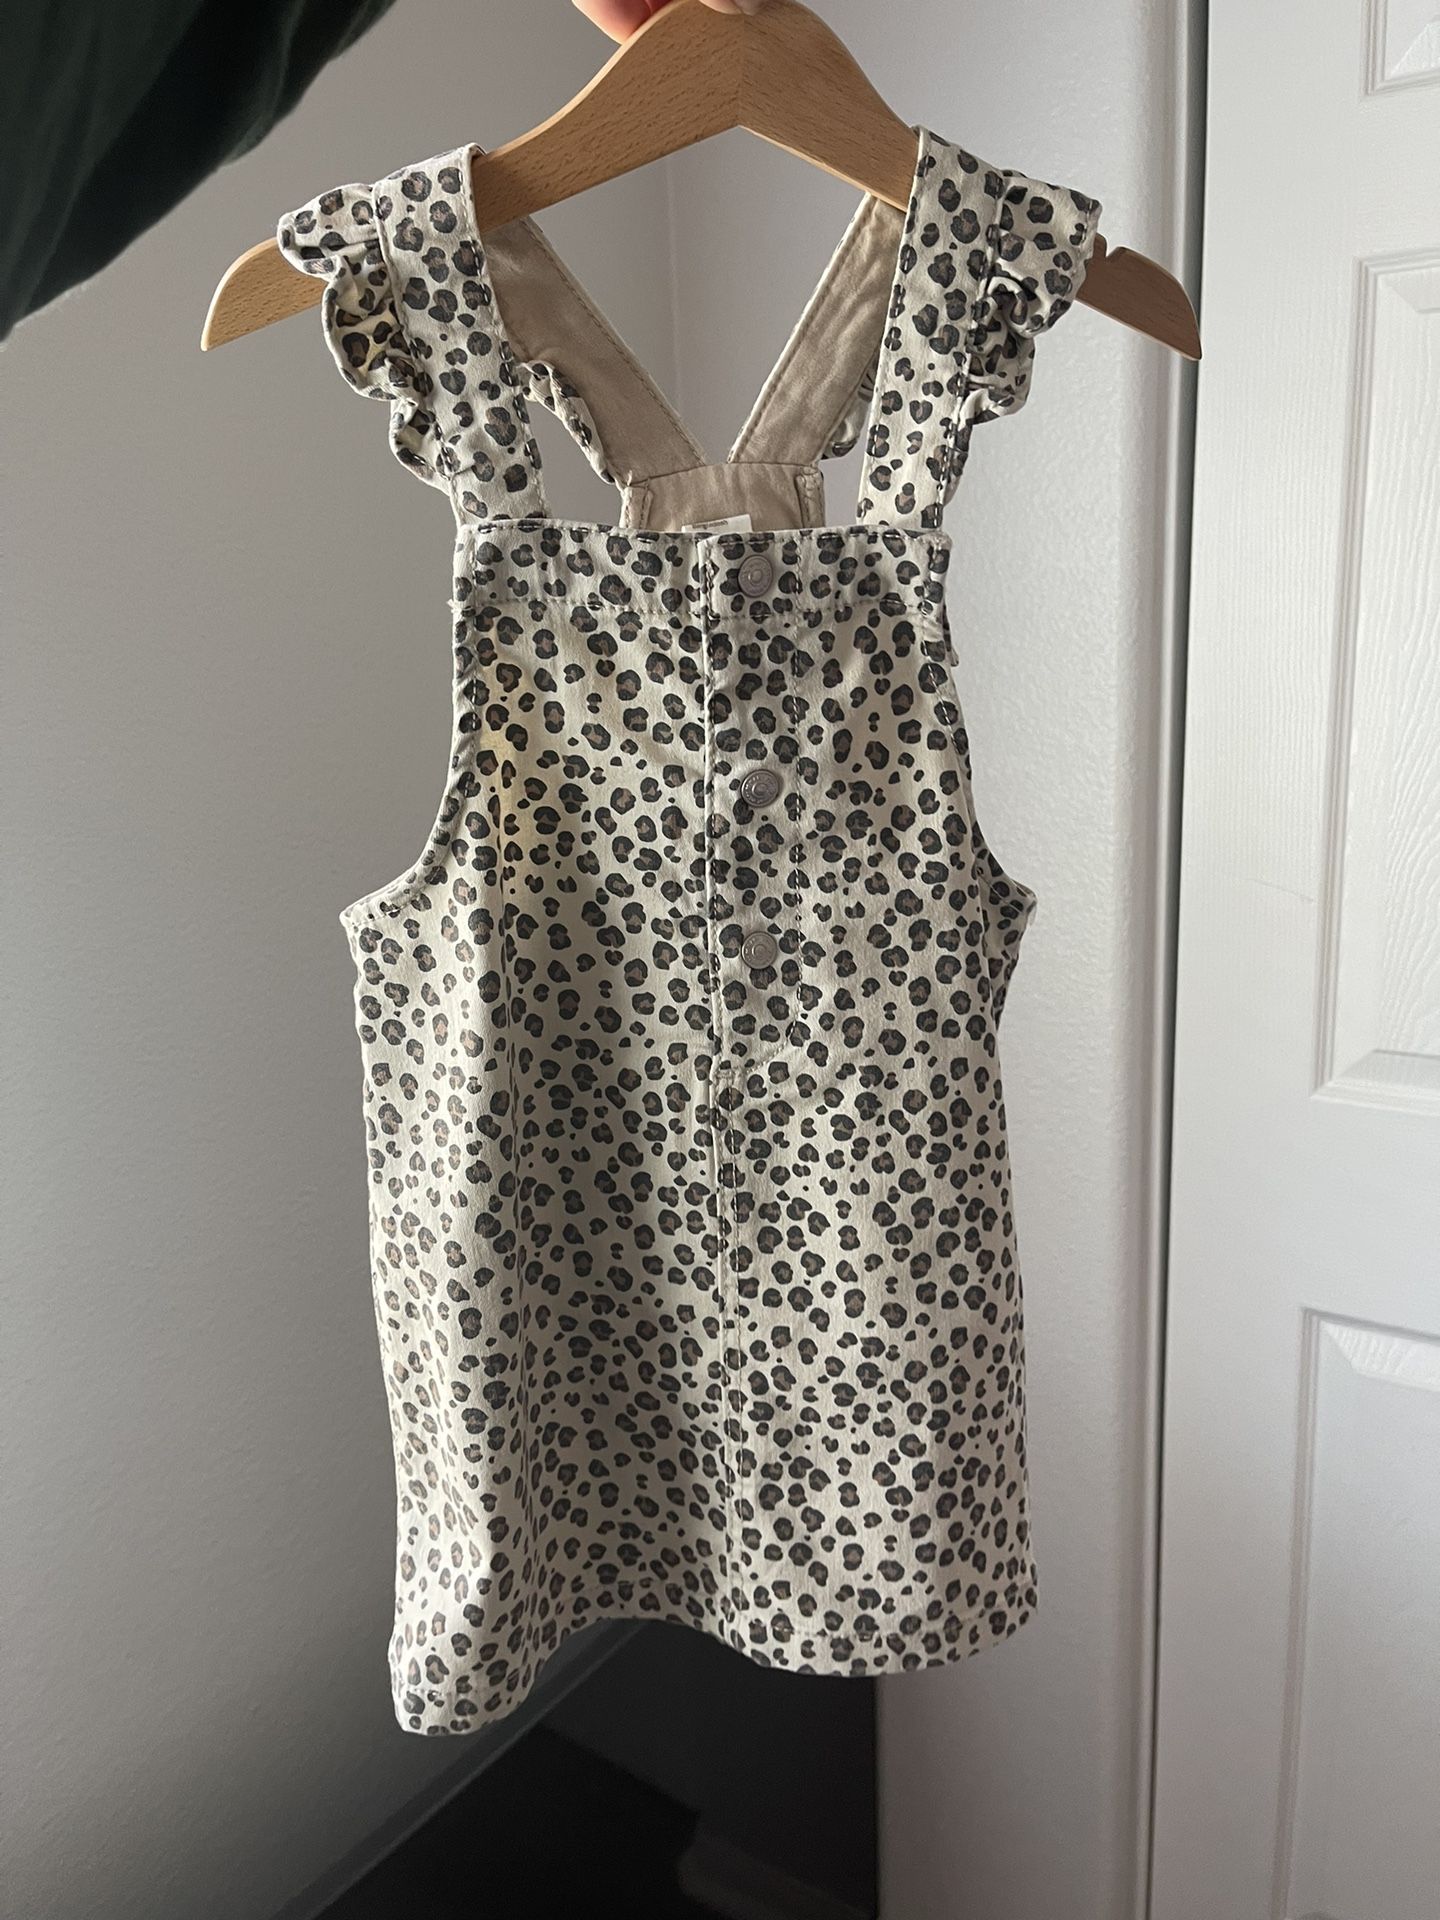 Toddler Cheetah Overall Dress 2T